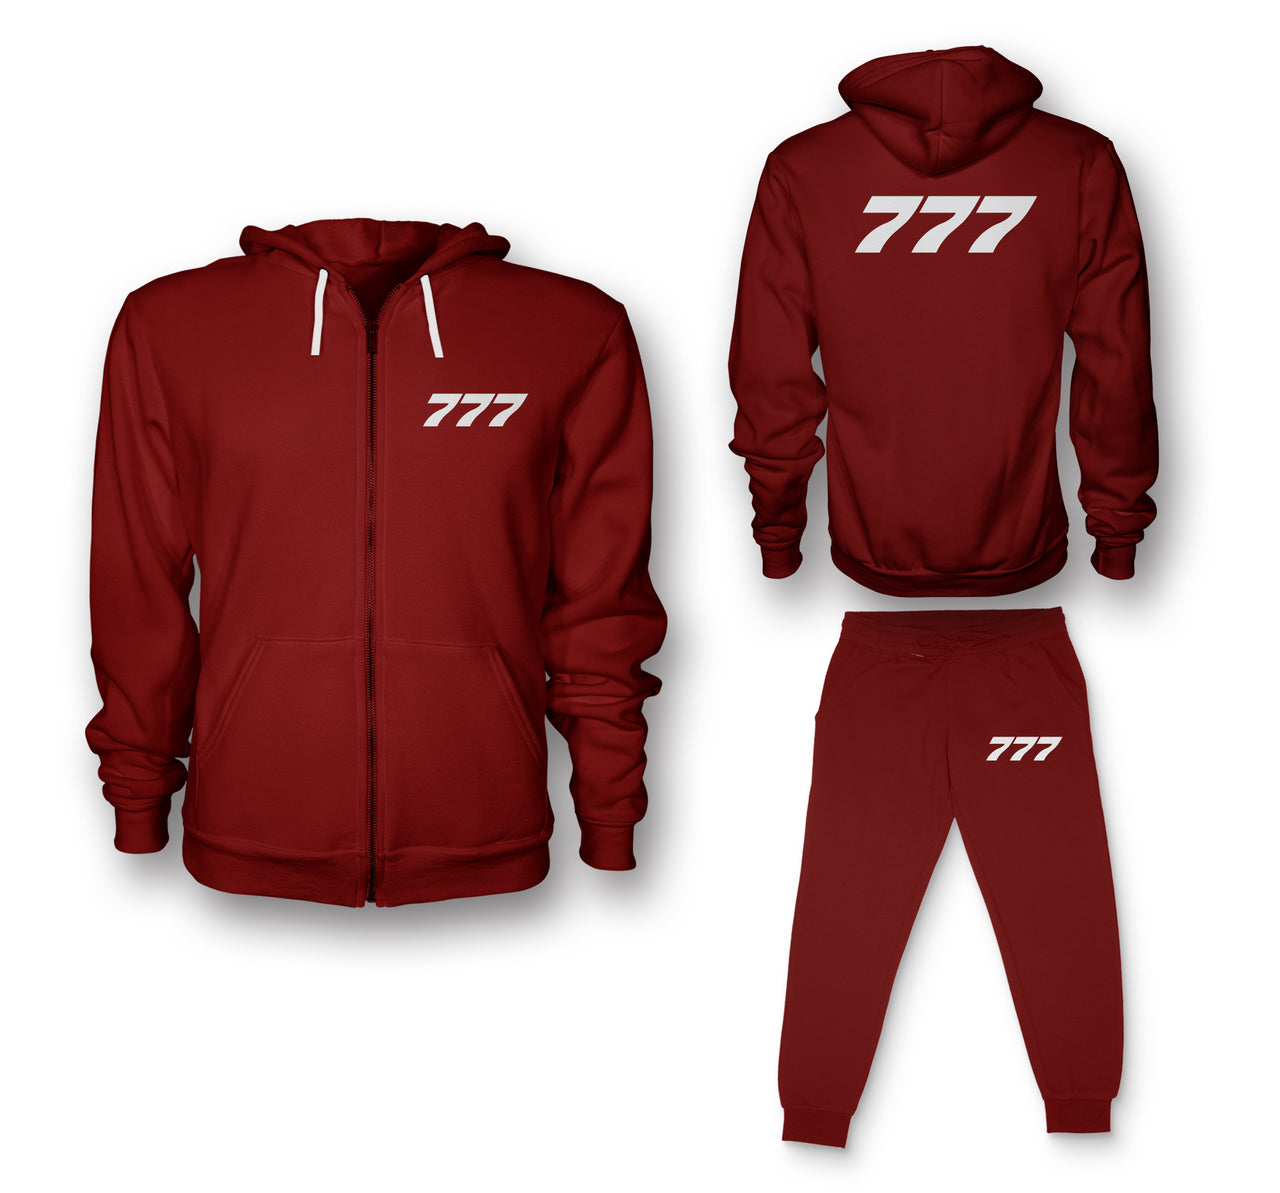 777 Flat Text Designed Zipped Hoodies & Sweatpants Set